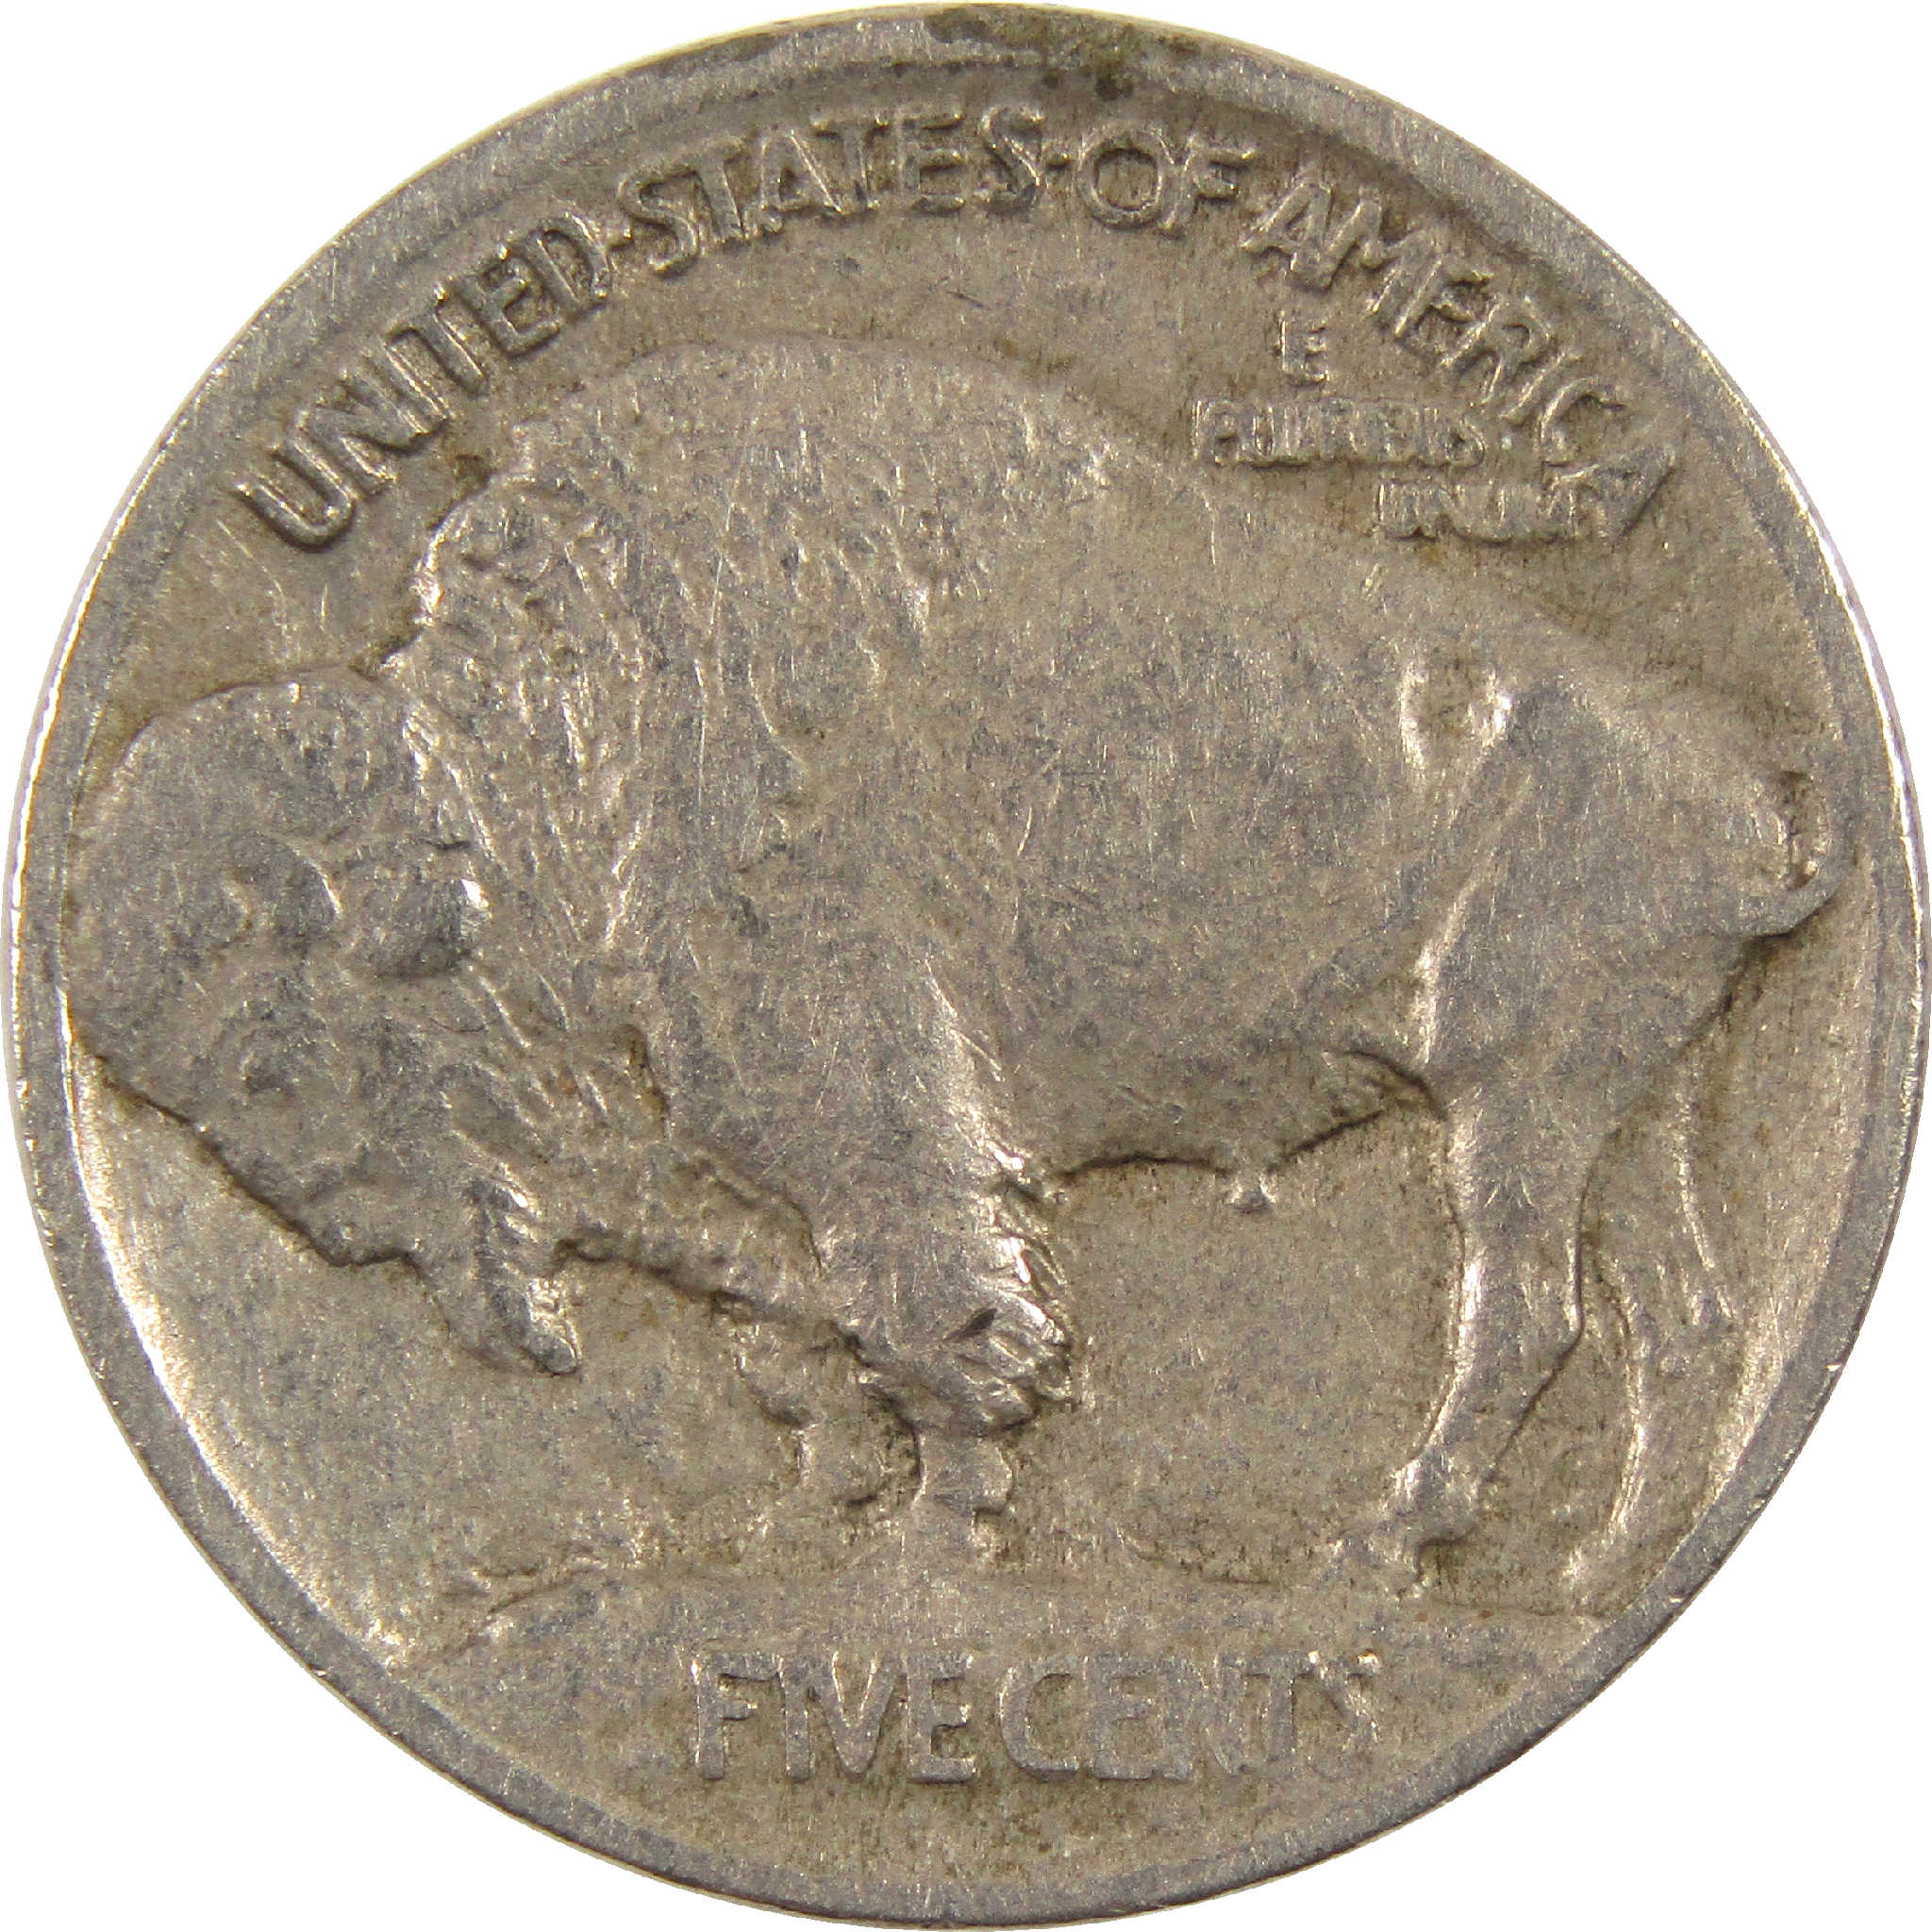 1913 Type 1 Indian Head Buffalo Nickel VF Very Fine 5c Coin SKU:I11470